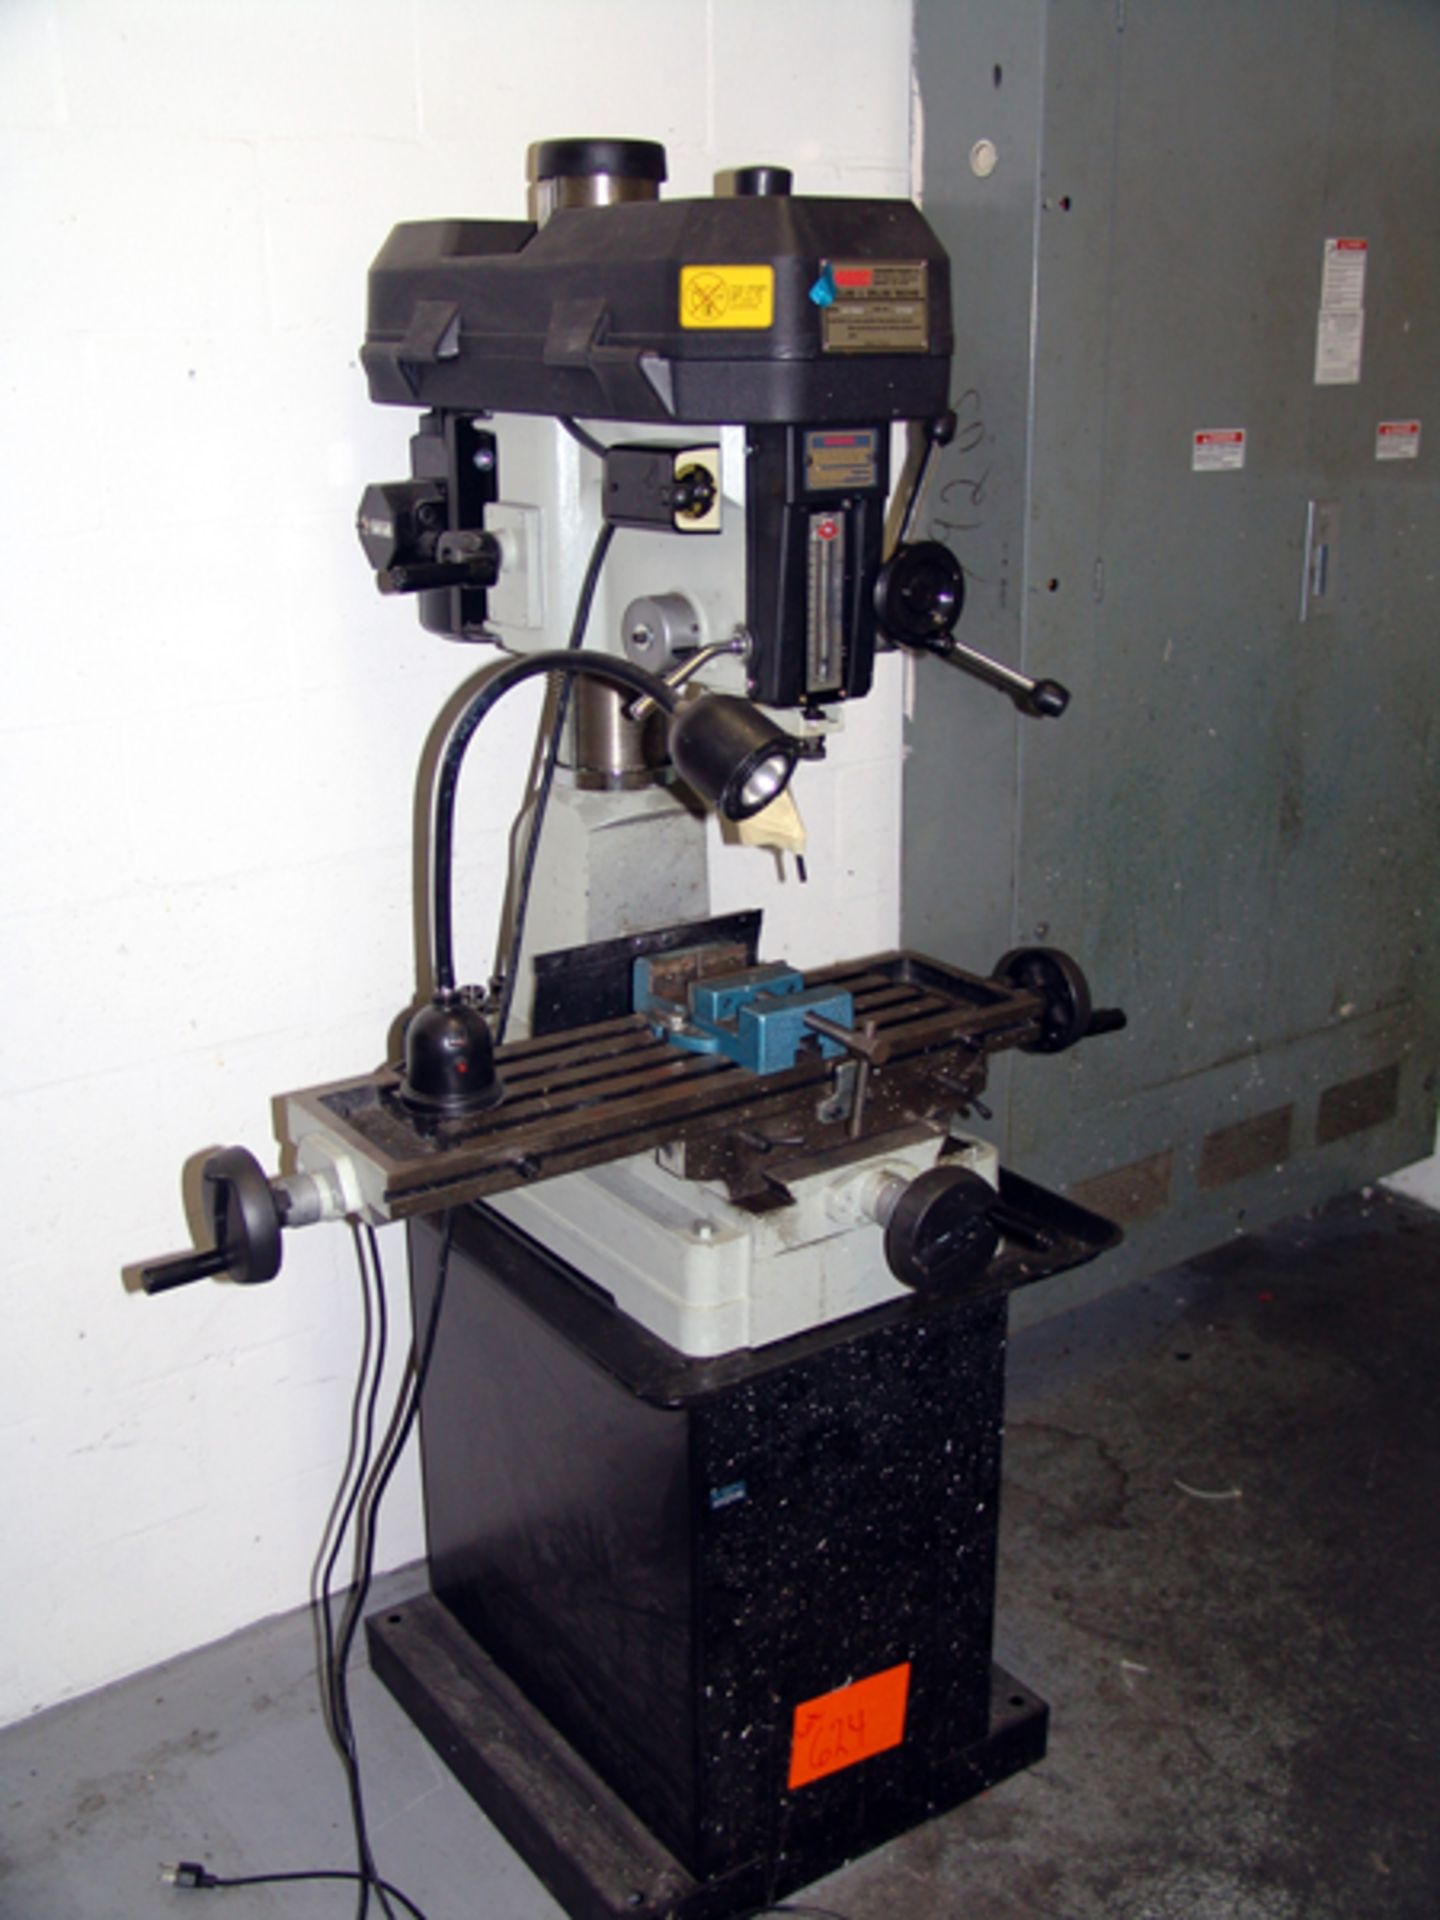 MSC Milling and Drilling Machine, Model 00685420, s/n 635120 on Metal Platform